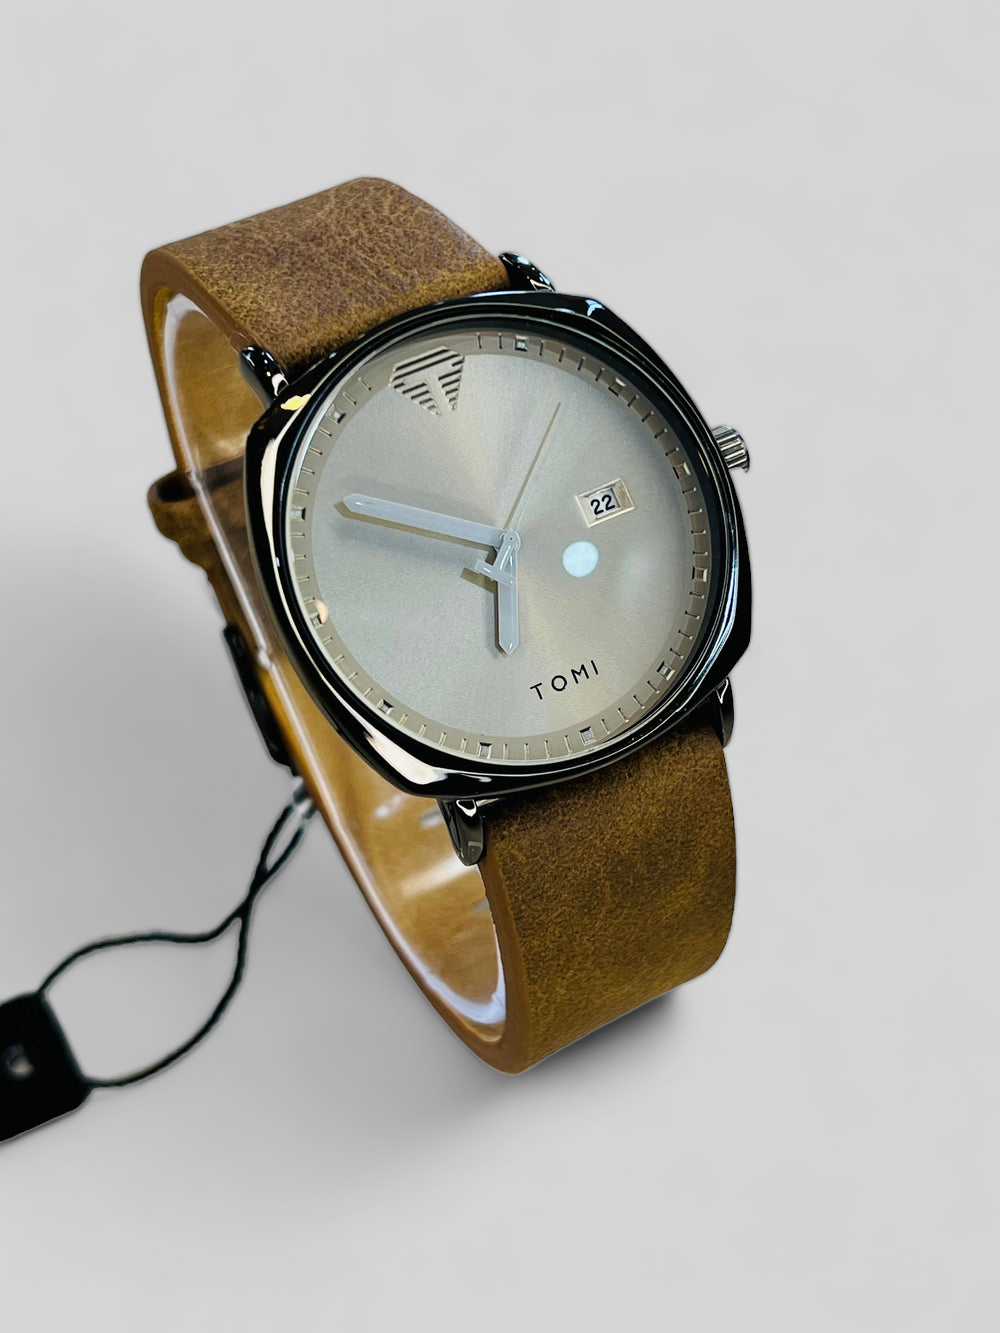 TOMI T-044 Men's Watch Quartz Date Leather Strap